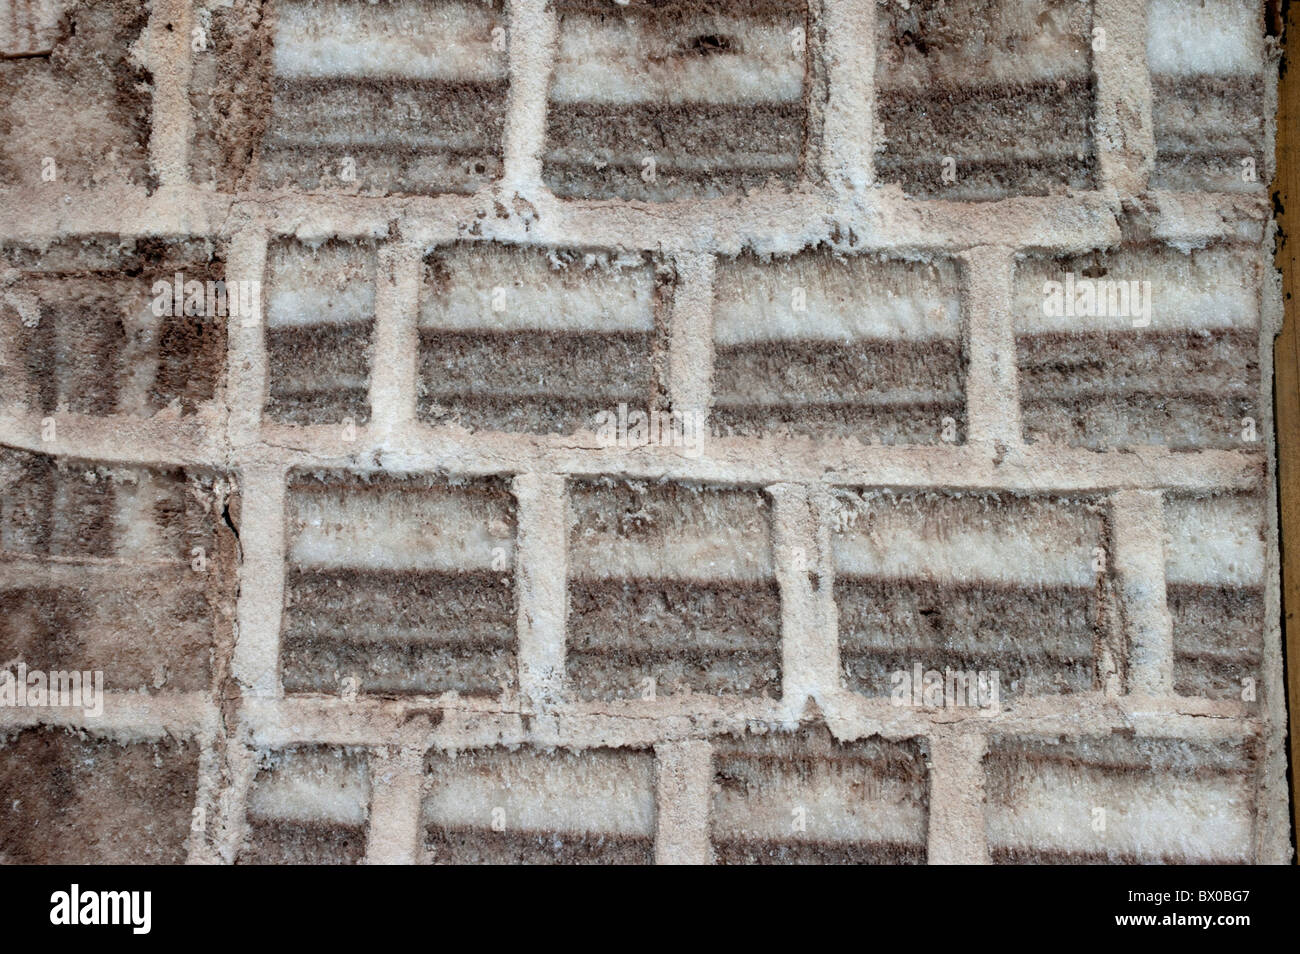 Building blocks cut from thick salt lake, Salt Hotel, Salar de Uyuni salt flats, Bolivia. Stock Photo